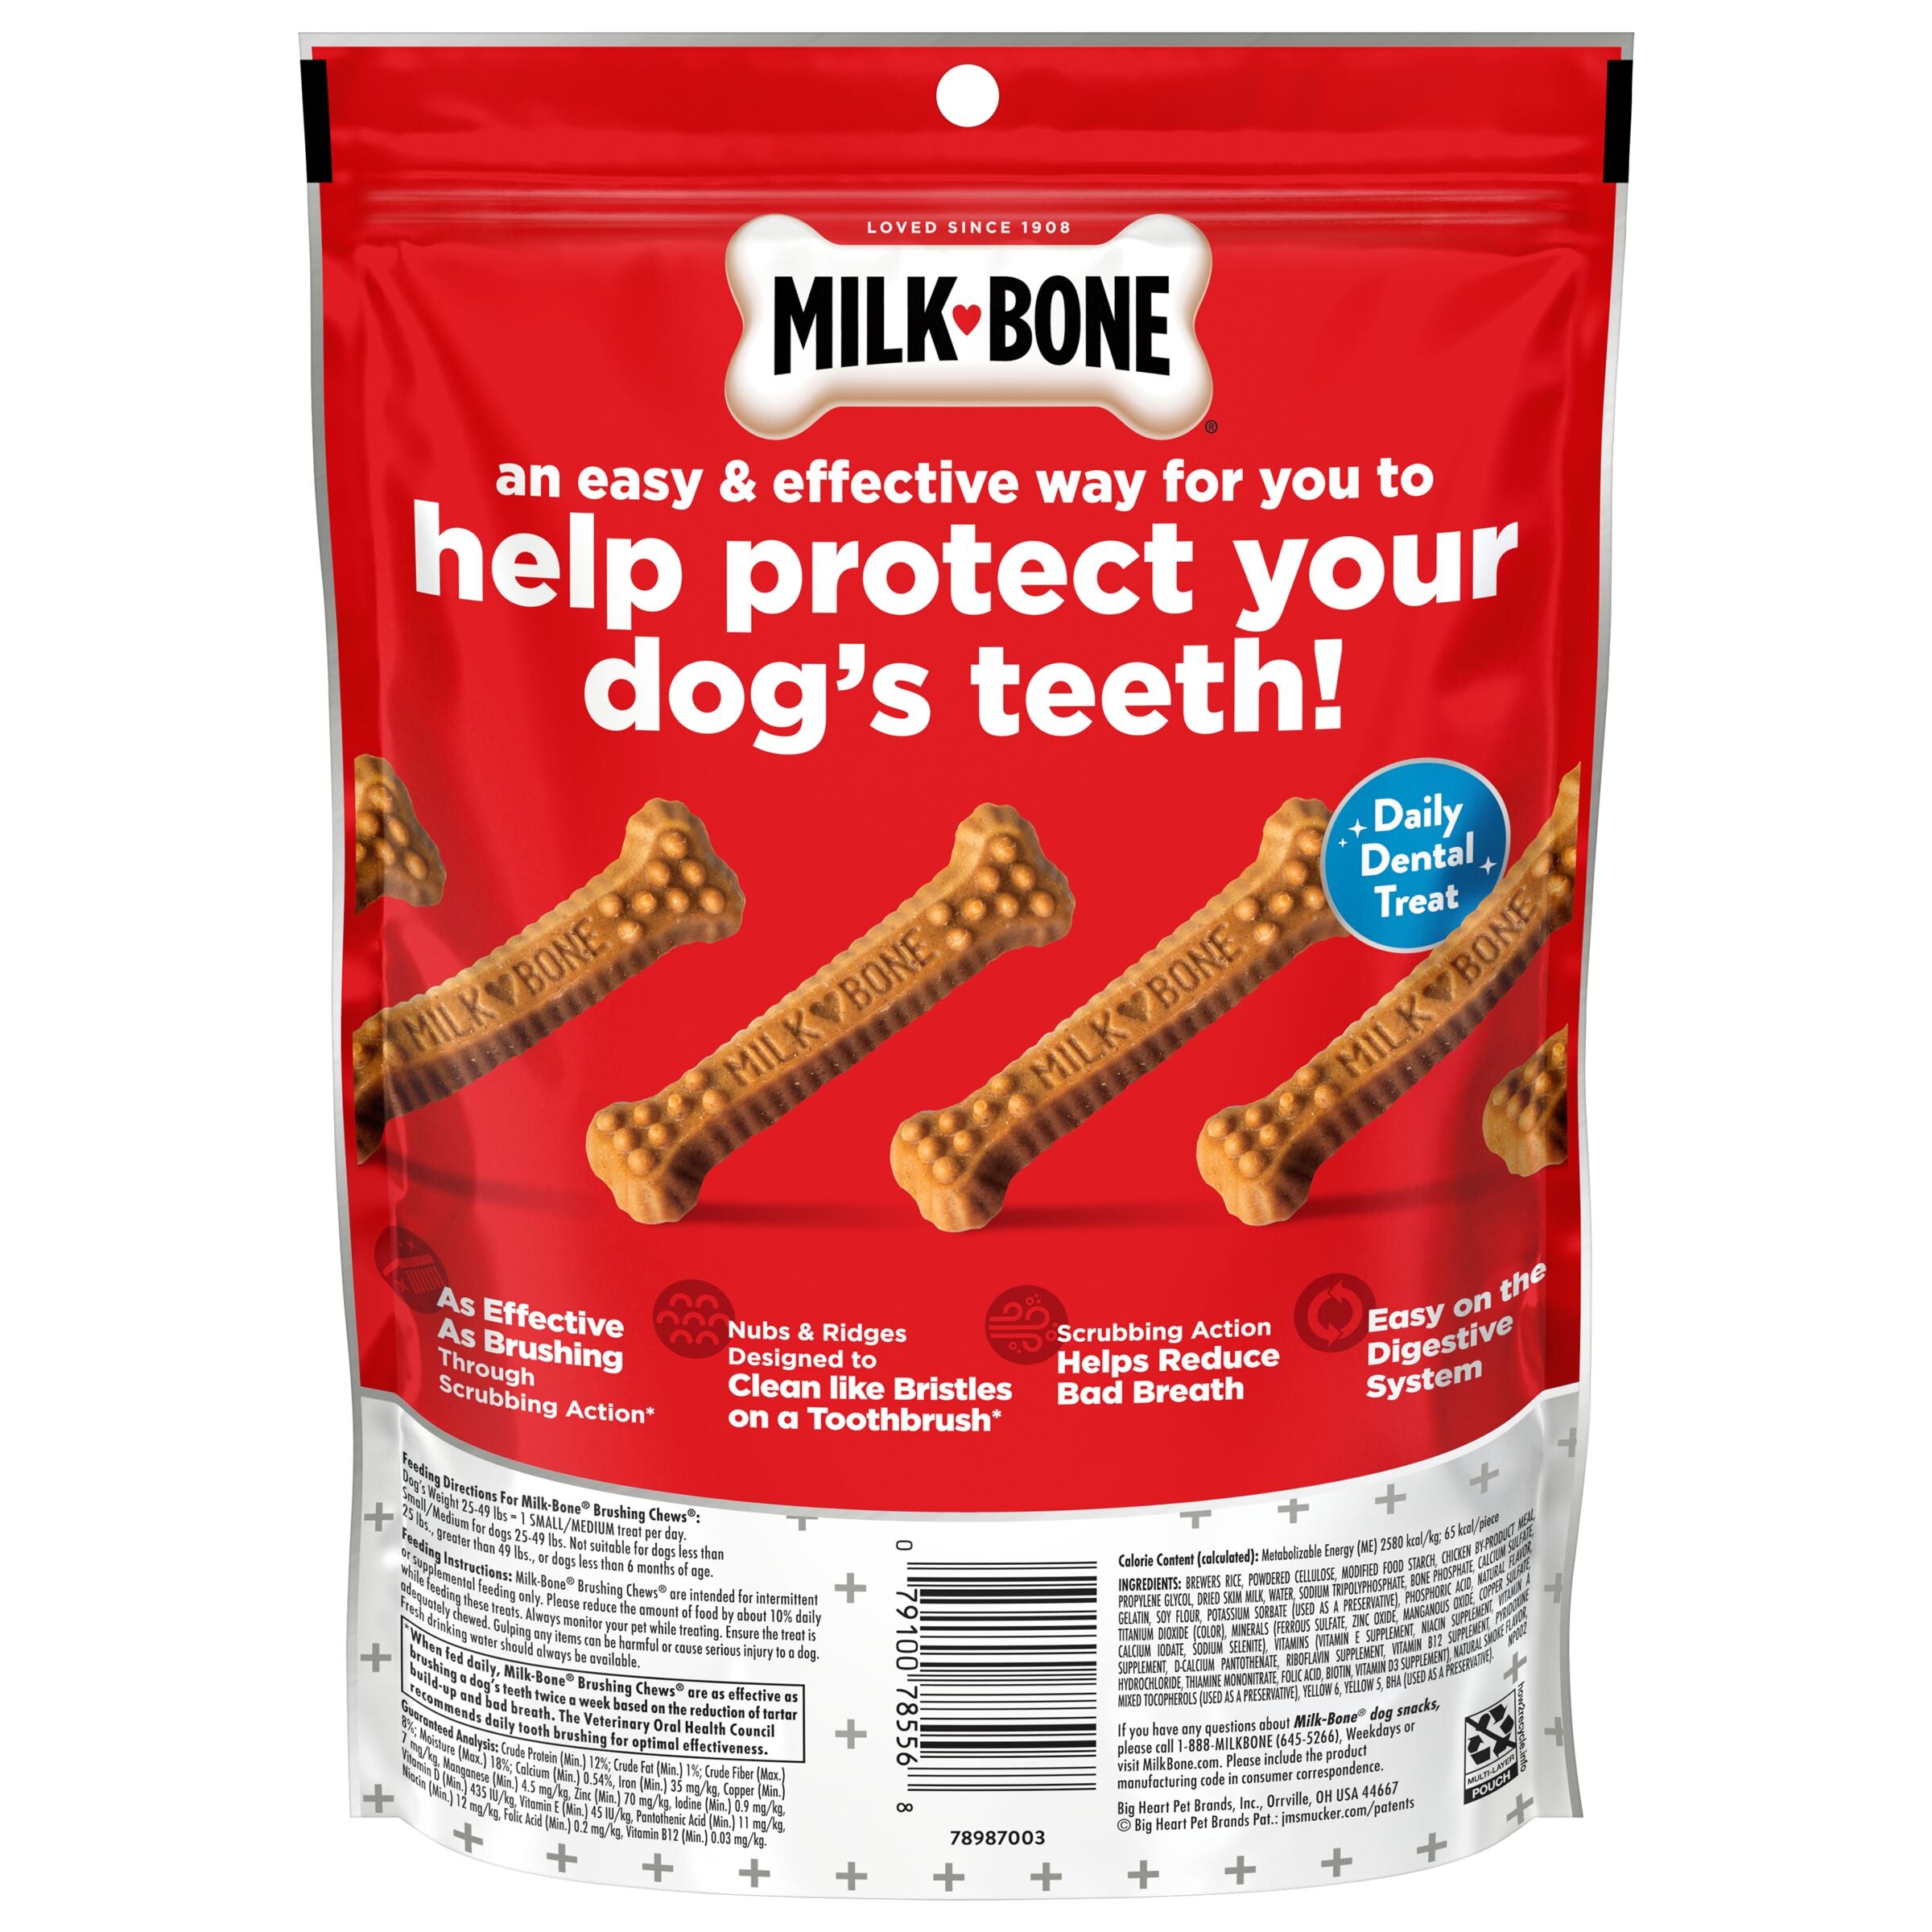 Milk-Bone Brushing Chews Daily Dental Dog Treats, Small-Medium, 9 Count